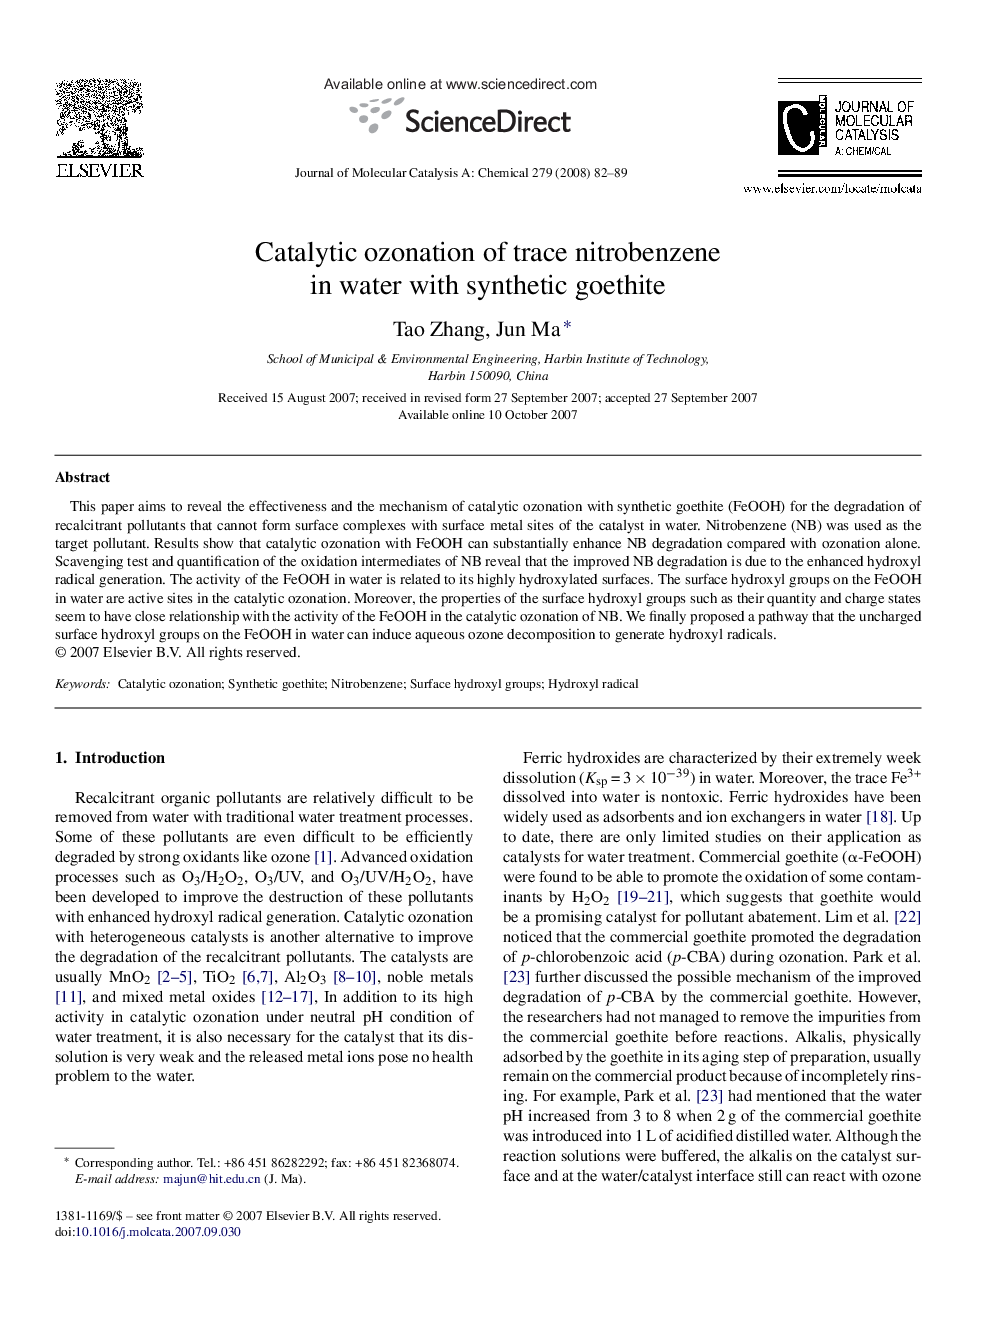 Catalytic ozonation of trace nitrobenzene in water with synthetic goethite